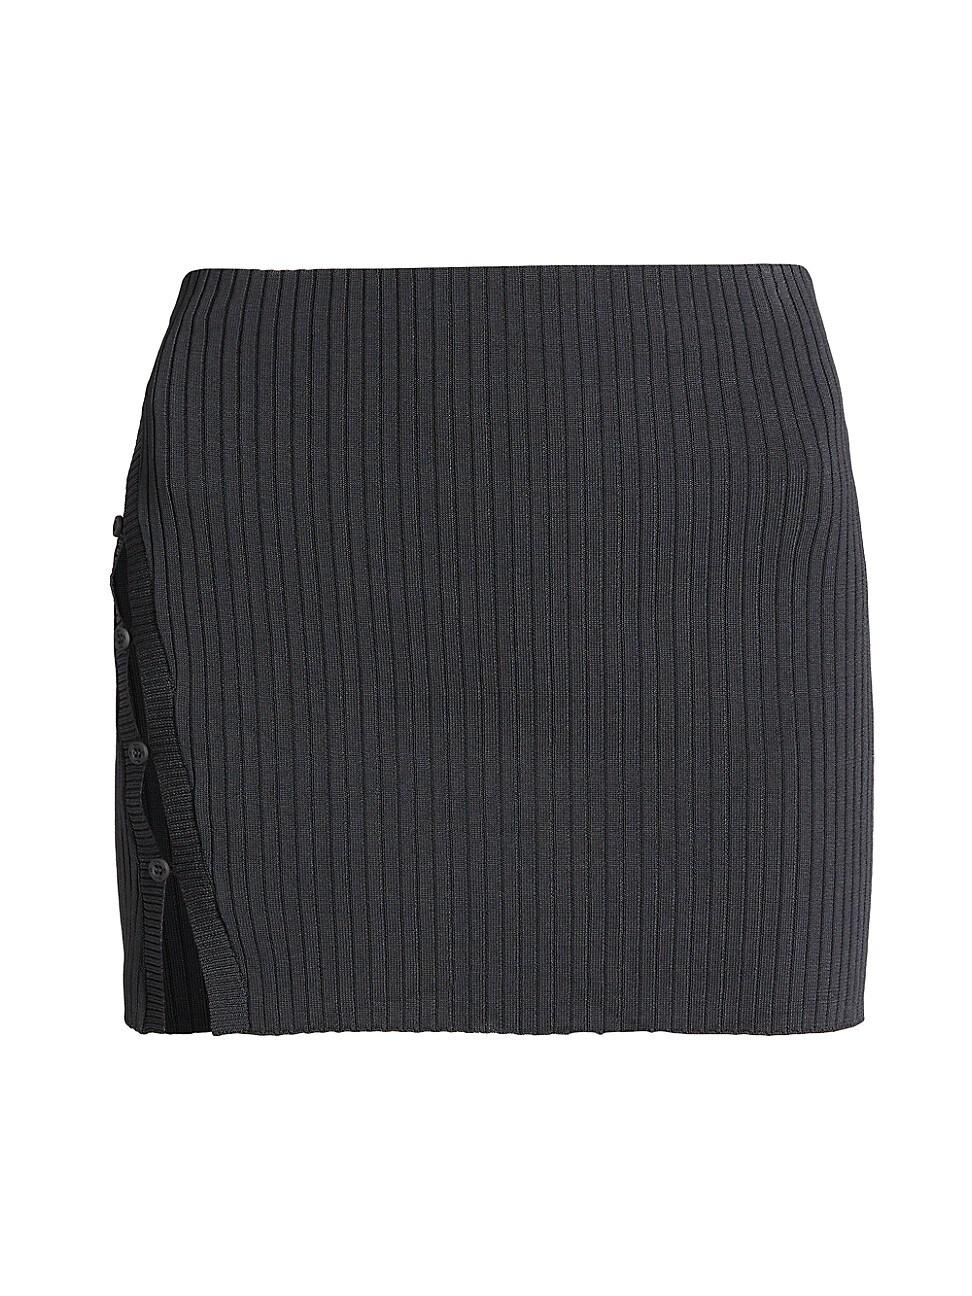 Ksubi Synthetic Transcend Miniskirt in Grey (Gray) | Lyst